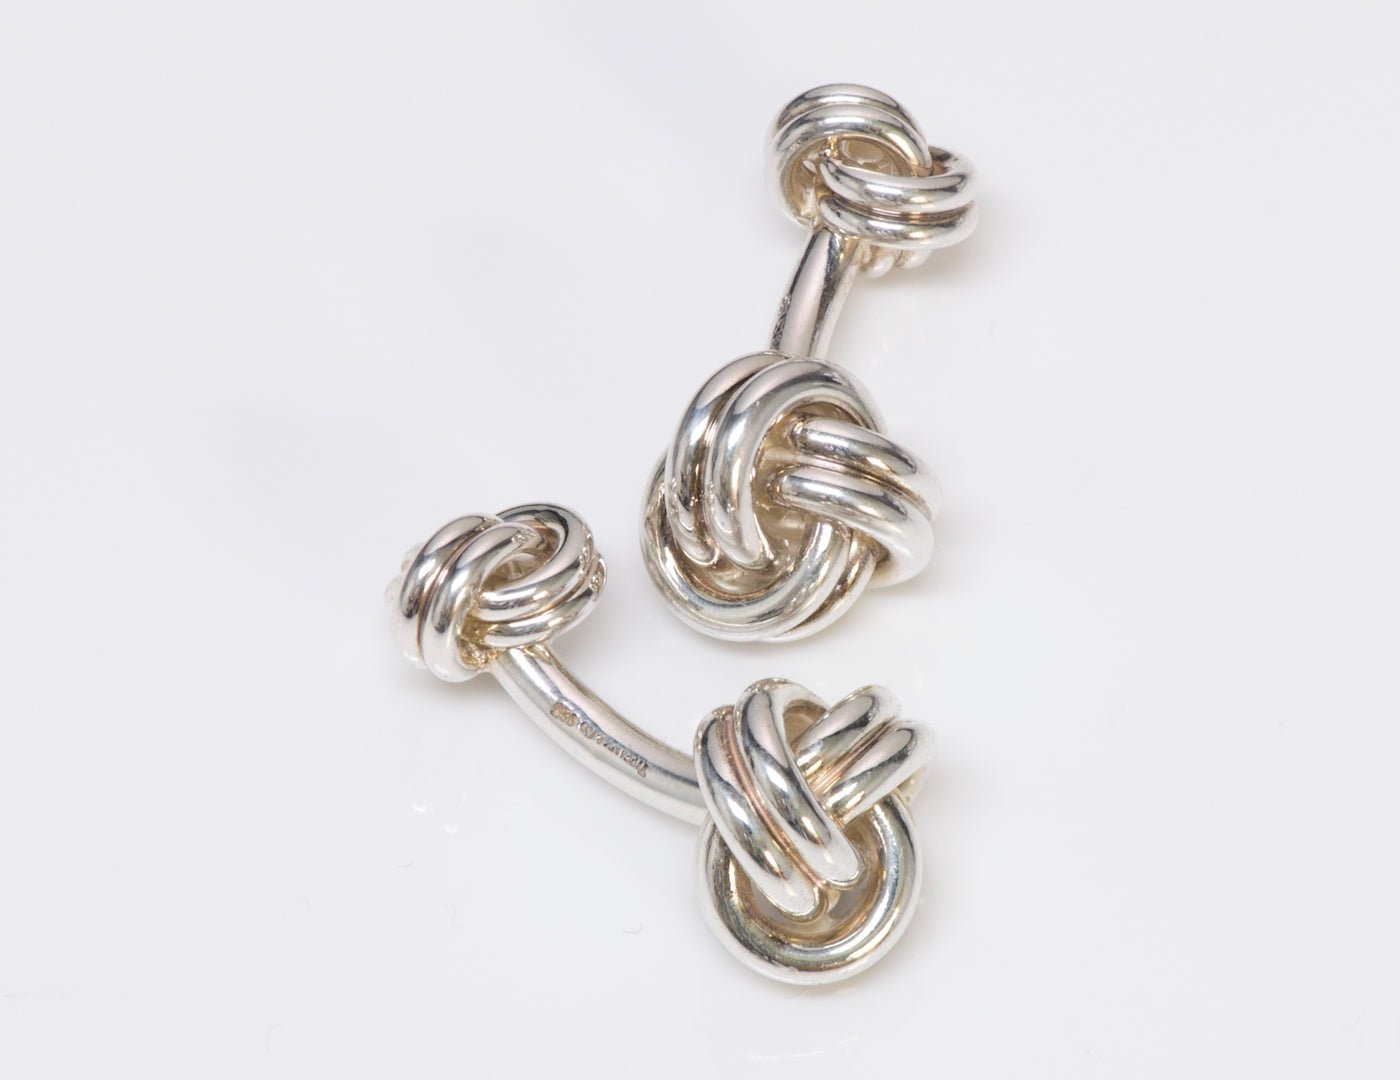 Tiffany & Co. Knot Cufflinks